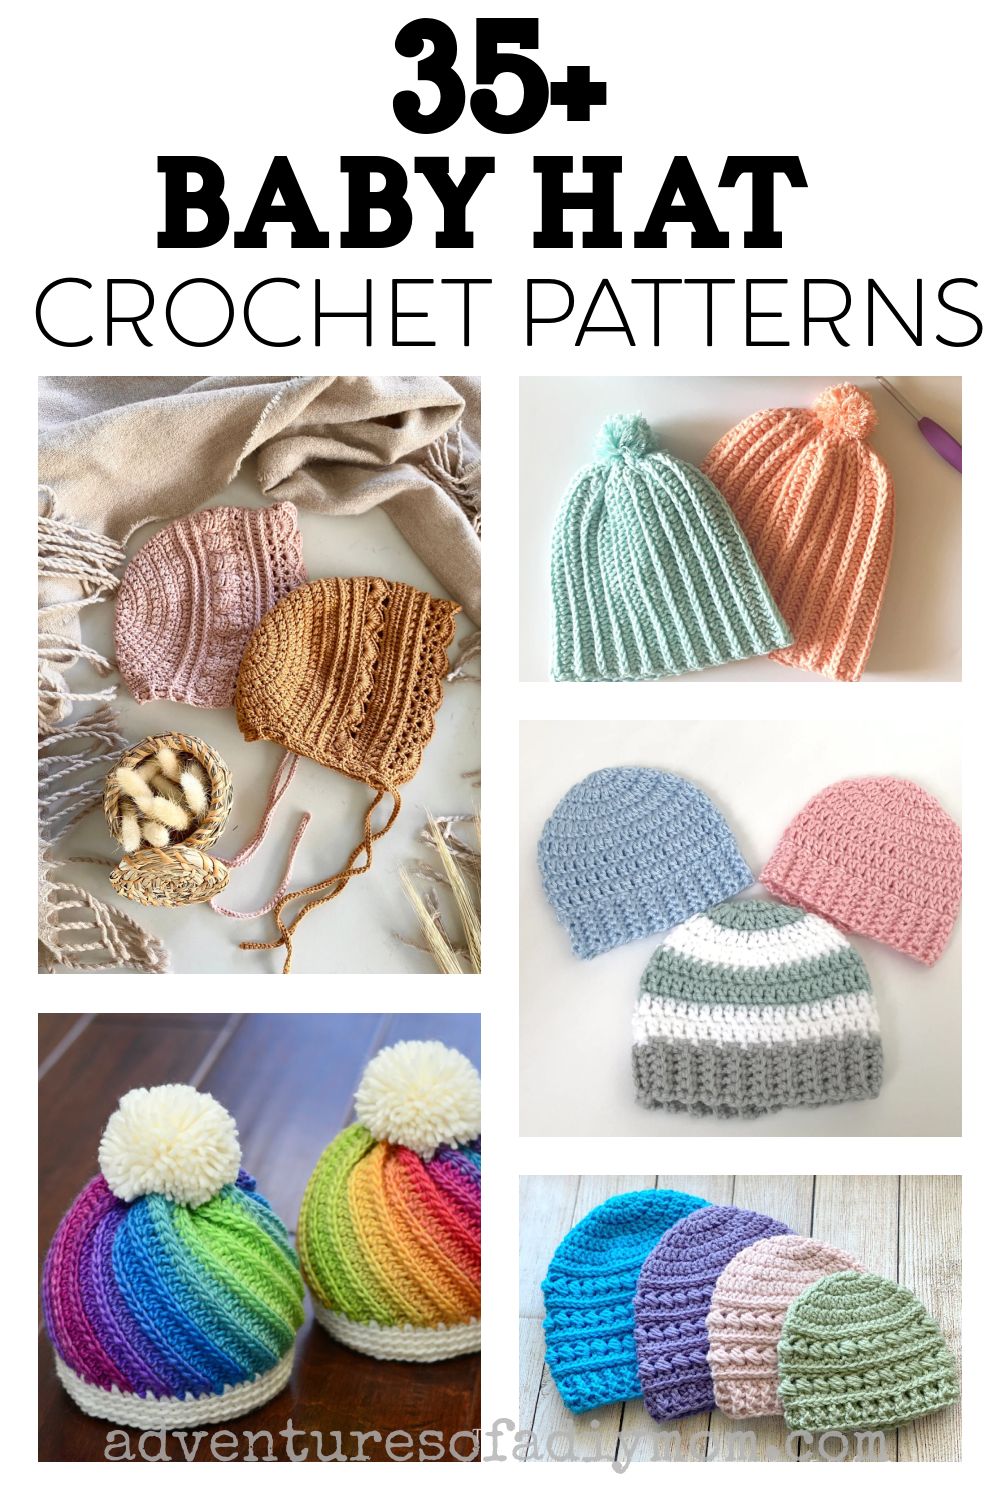 35+ Crochet Baby Hat Patterns - Adventures of a DIY Mom